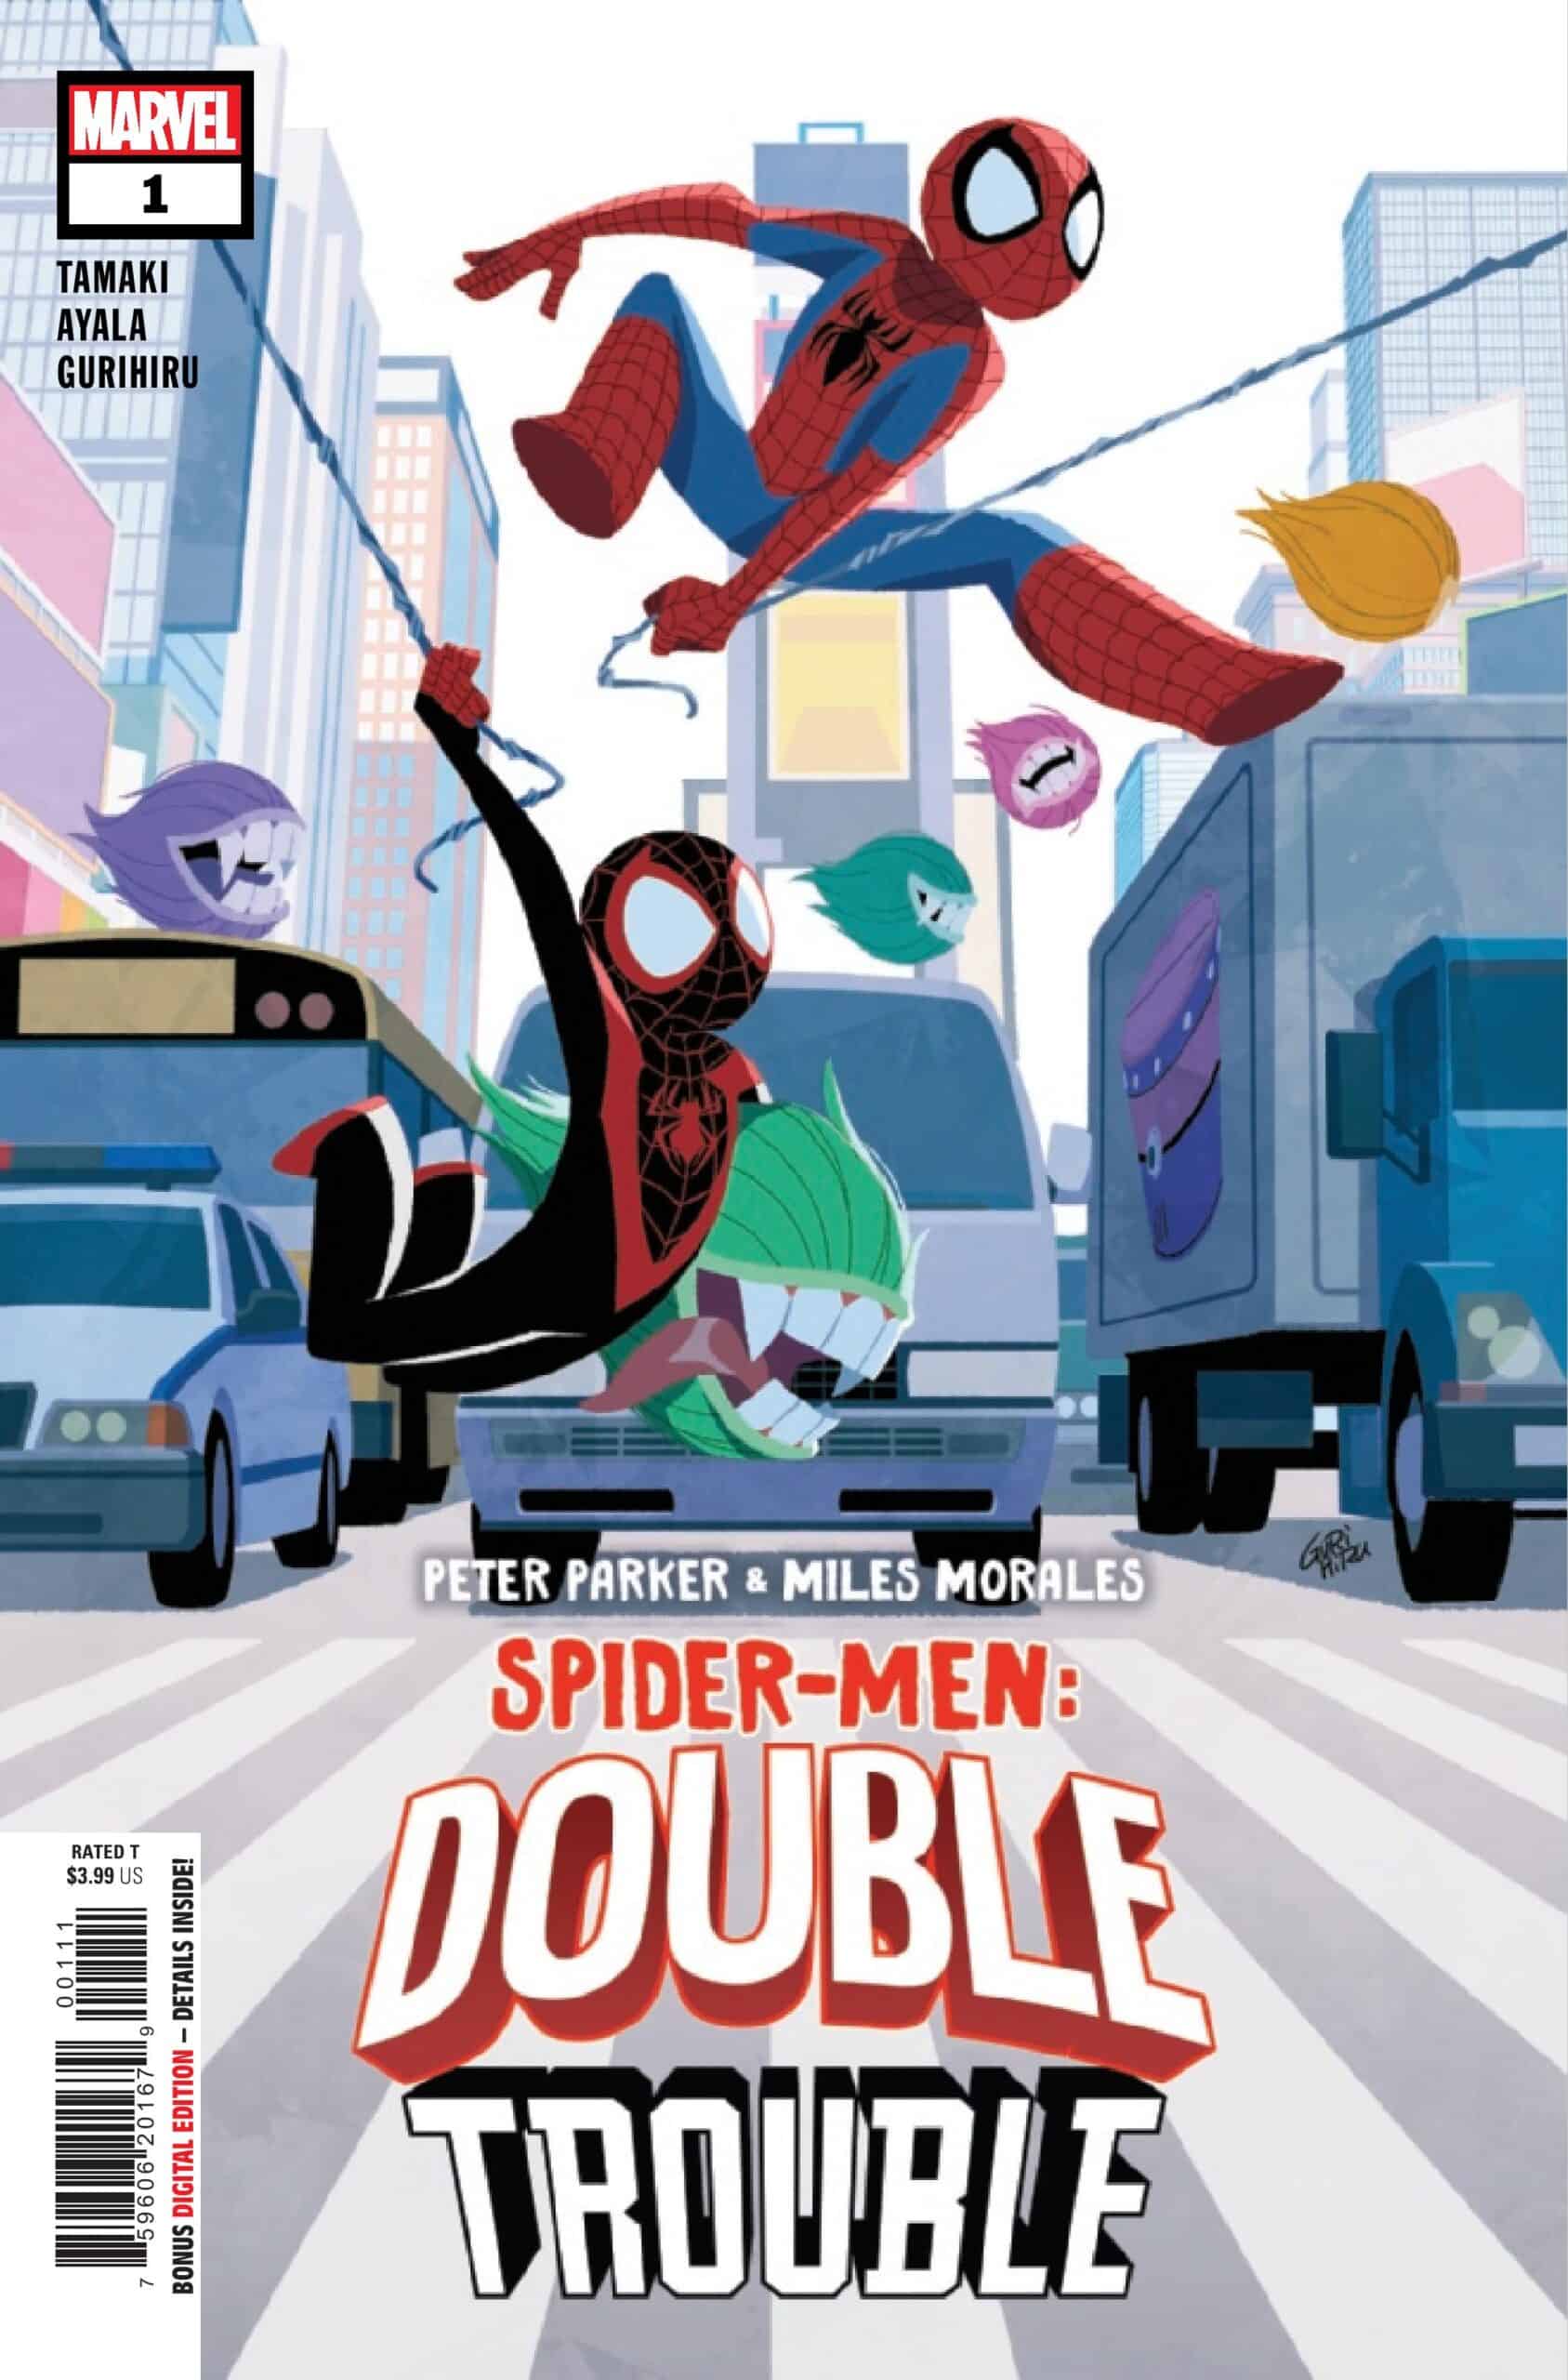 MARVEL COMICS SNEAK PEEK for November 30, 2022 : Its a Webslinging Good Time in PETER PARKER & MILE MORALES – SPIDER-MEN: DOUBLE TROUBLE #1